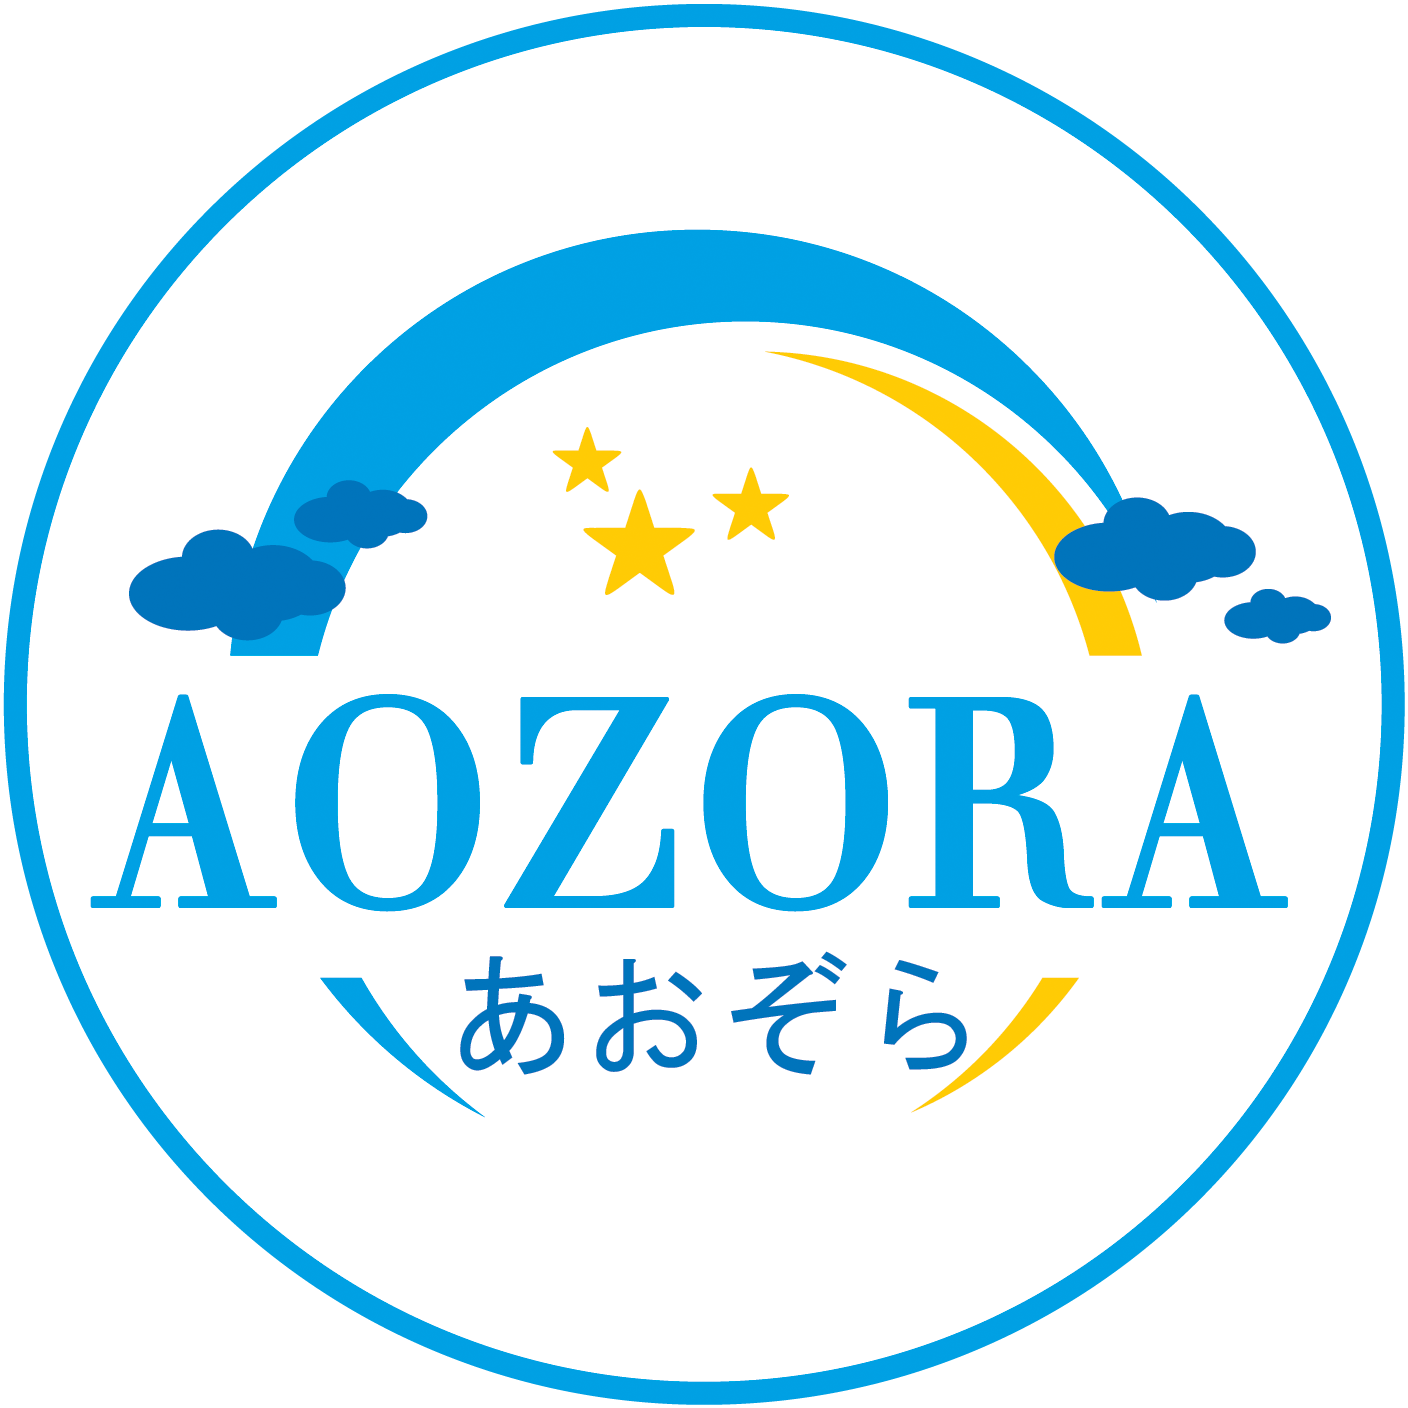 Aozora Preschool